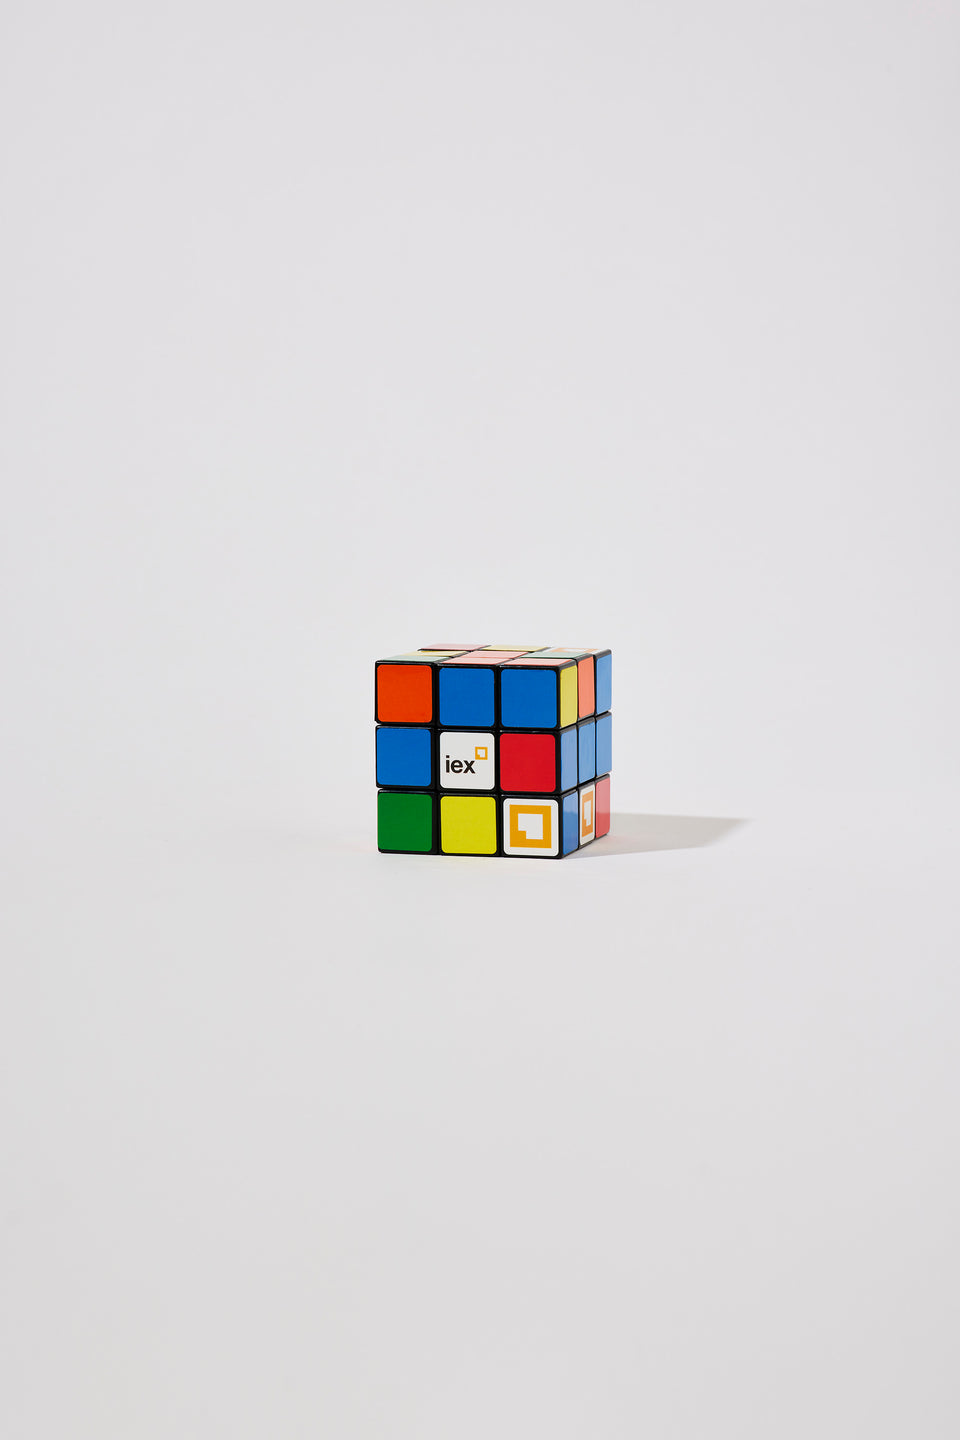 High-Performance Rubik's Cube